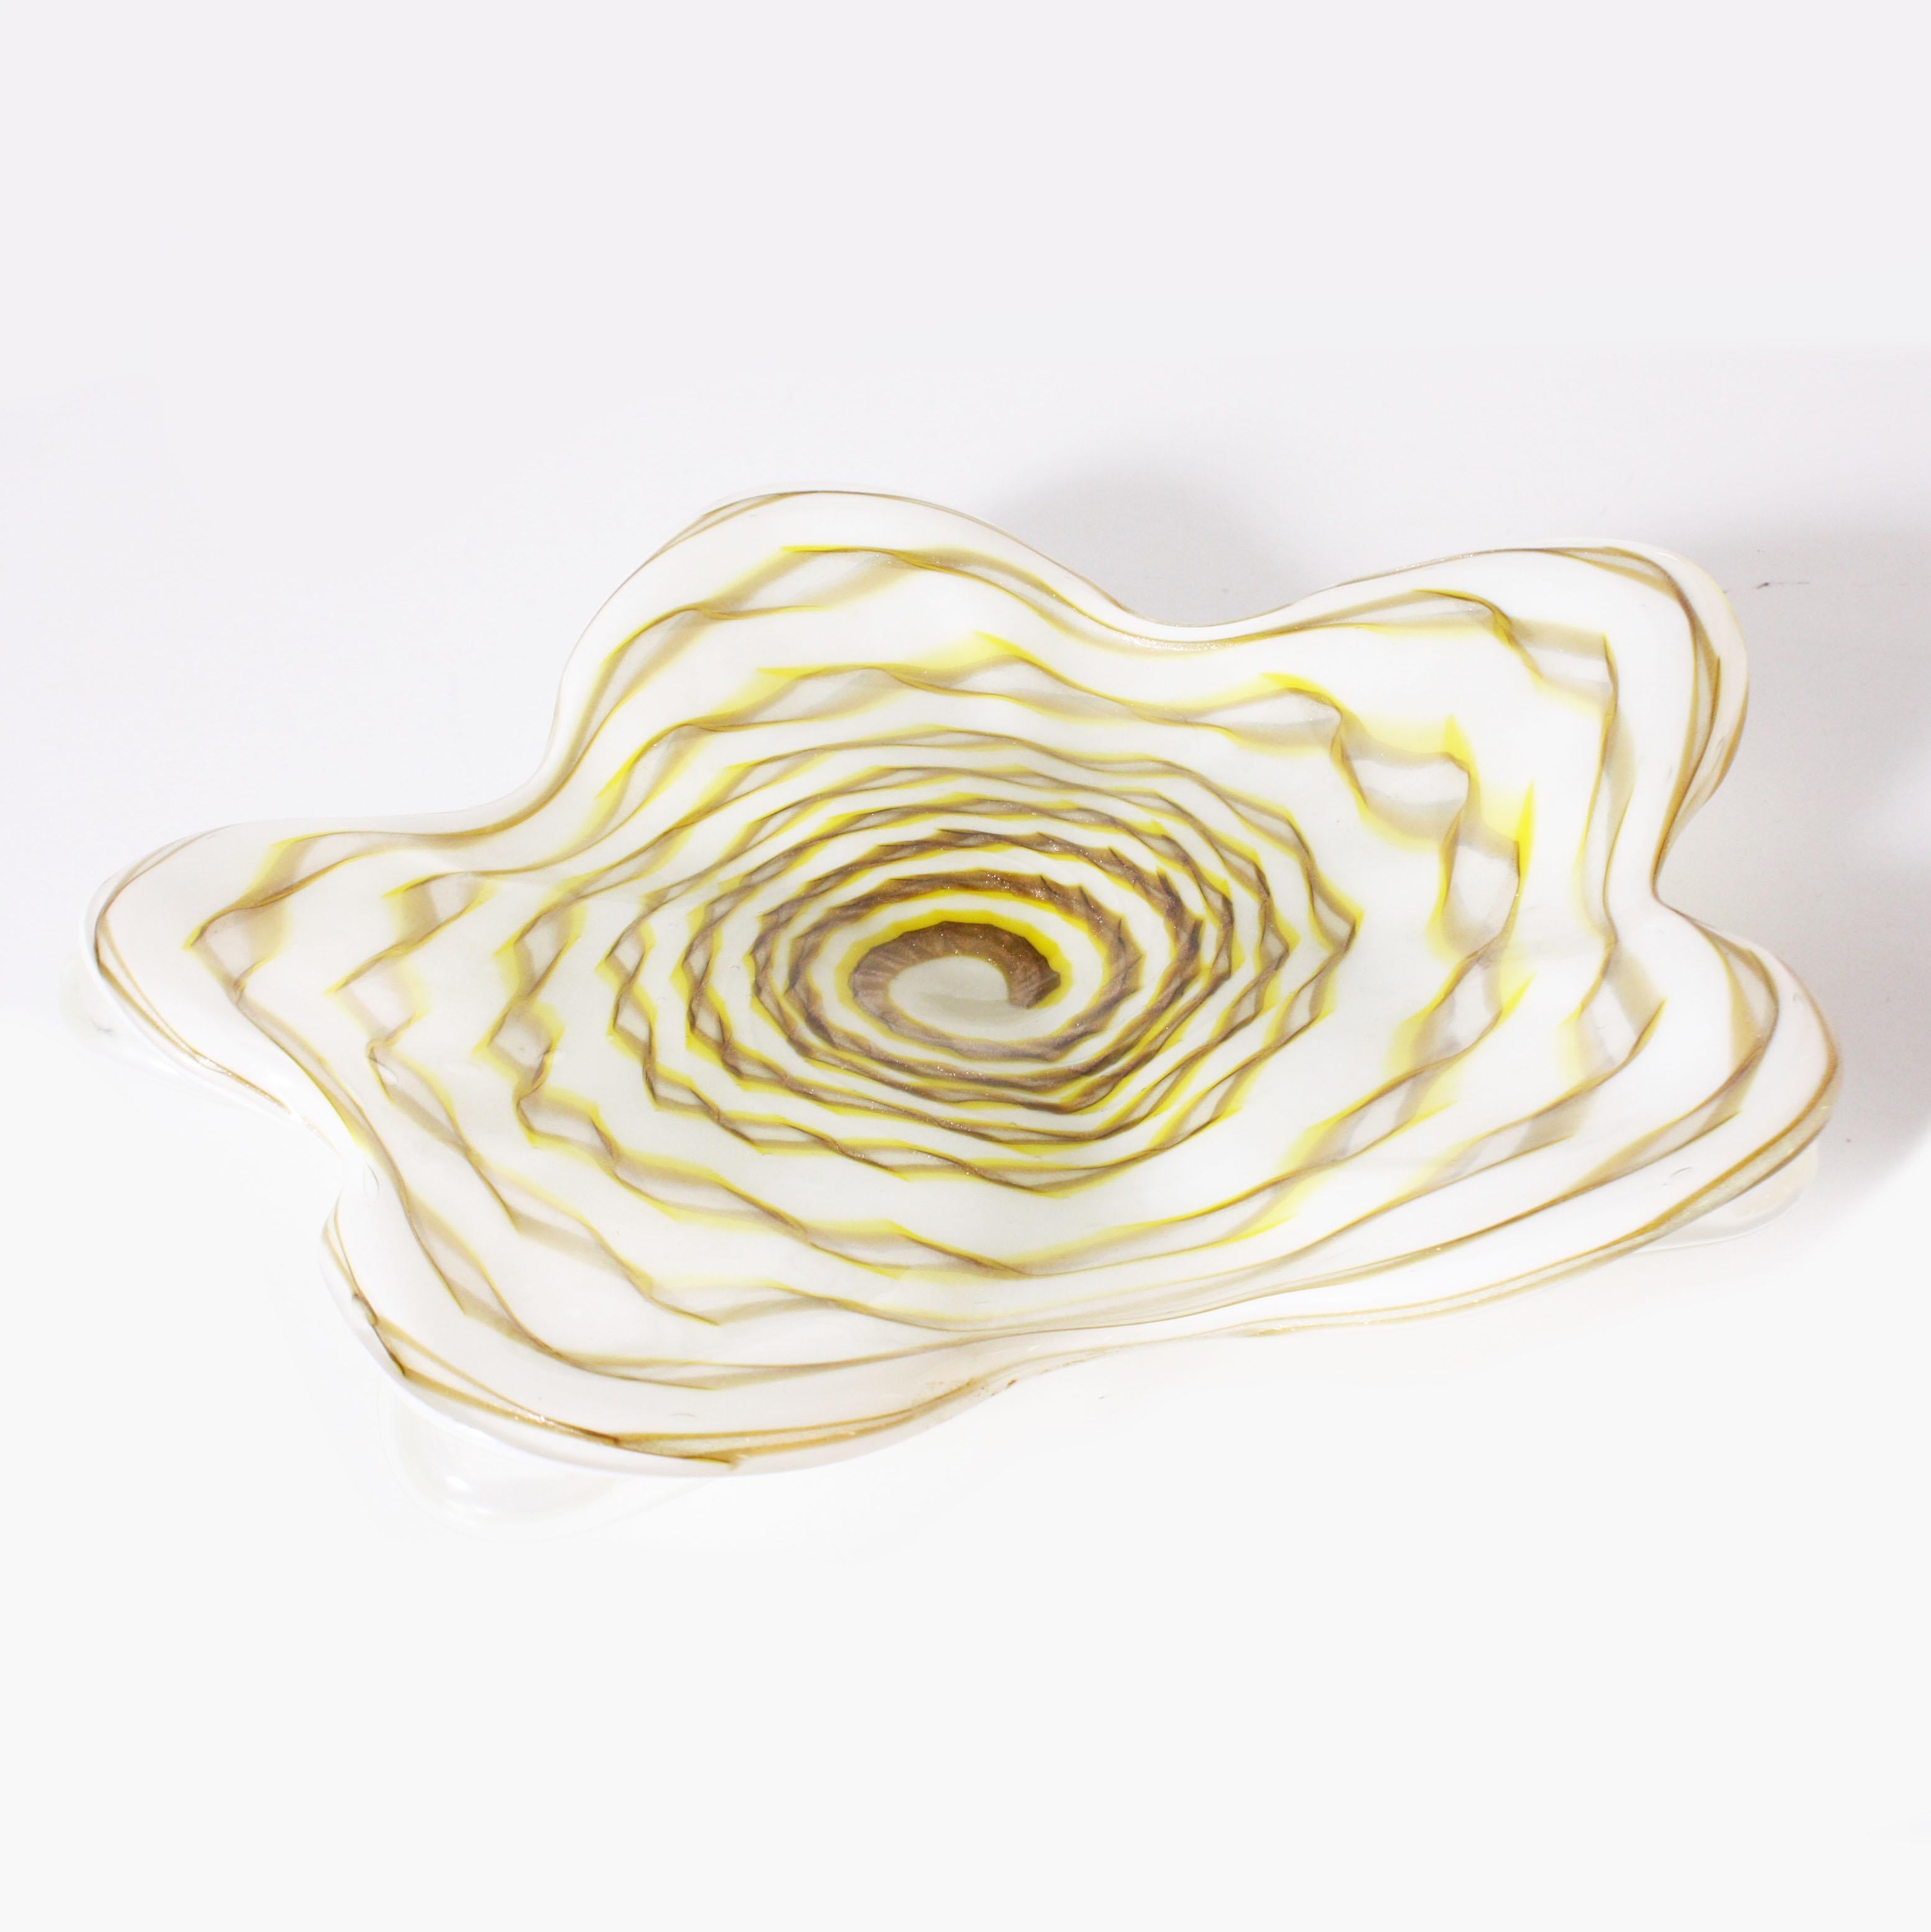 Murano glass floral shaped bowl, circa 1970
$650